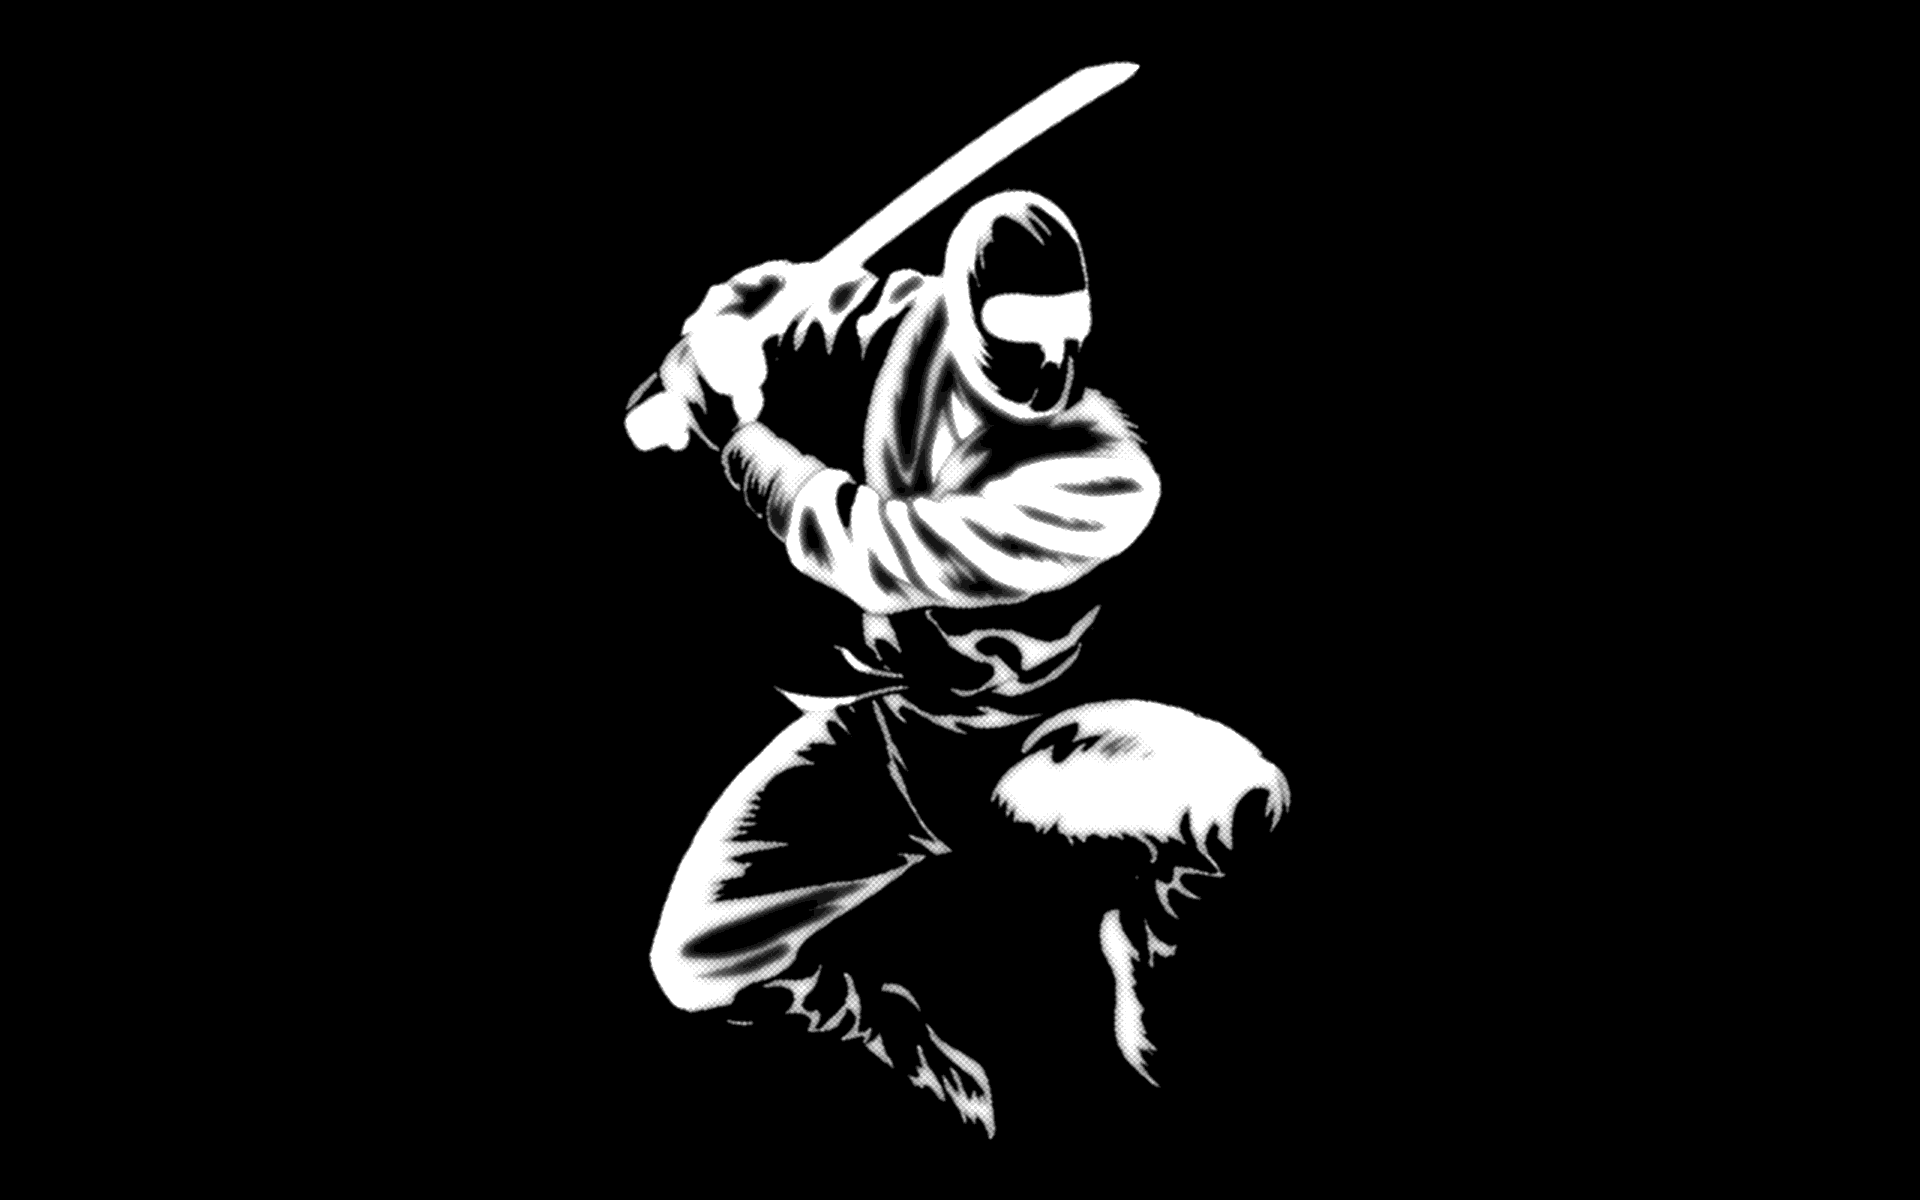 Black and White Ninja Logo - Free Ninja Wallpaper Download